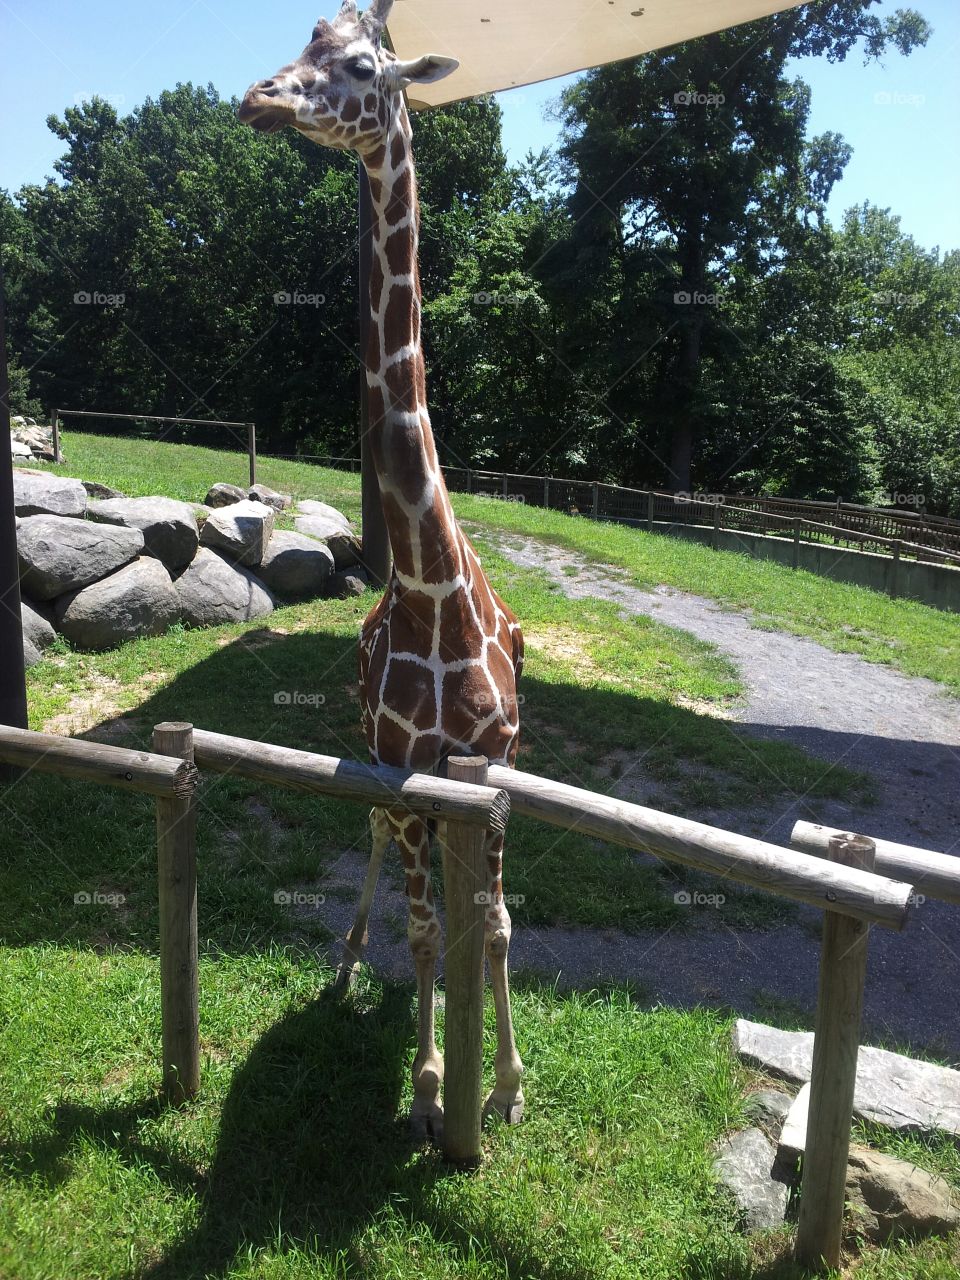 giraffe. went to the zoo